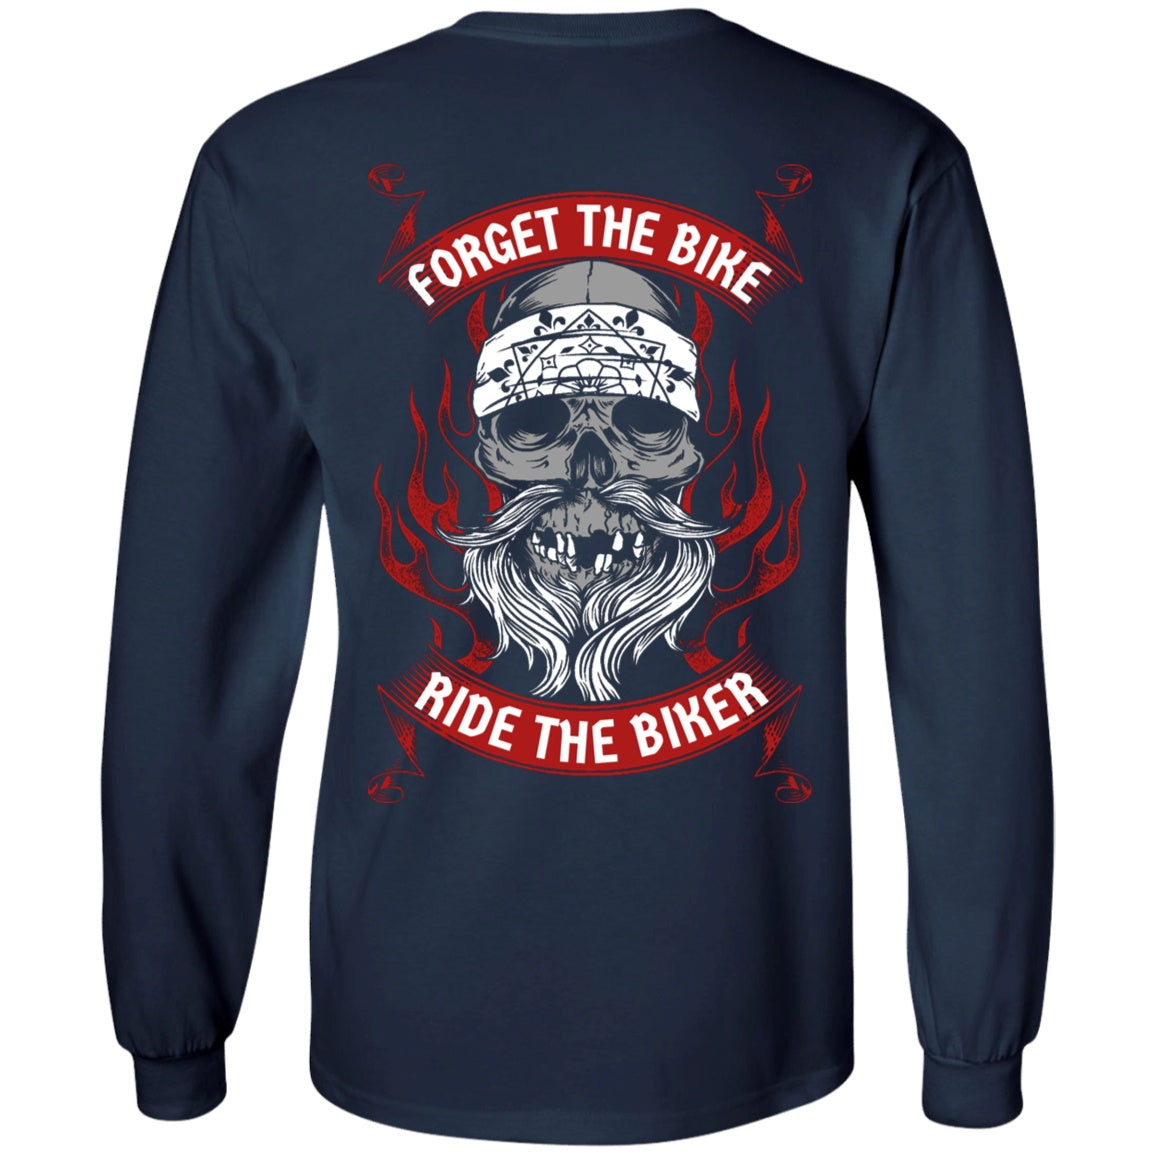 Forget the Bike Ride the Biker Shirt